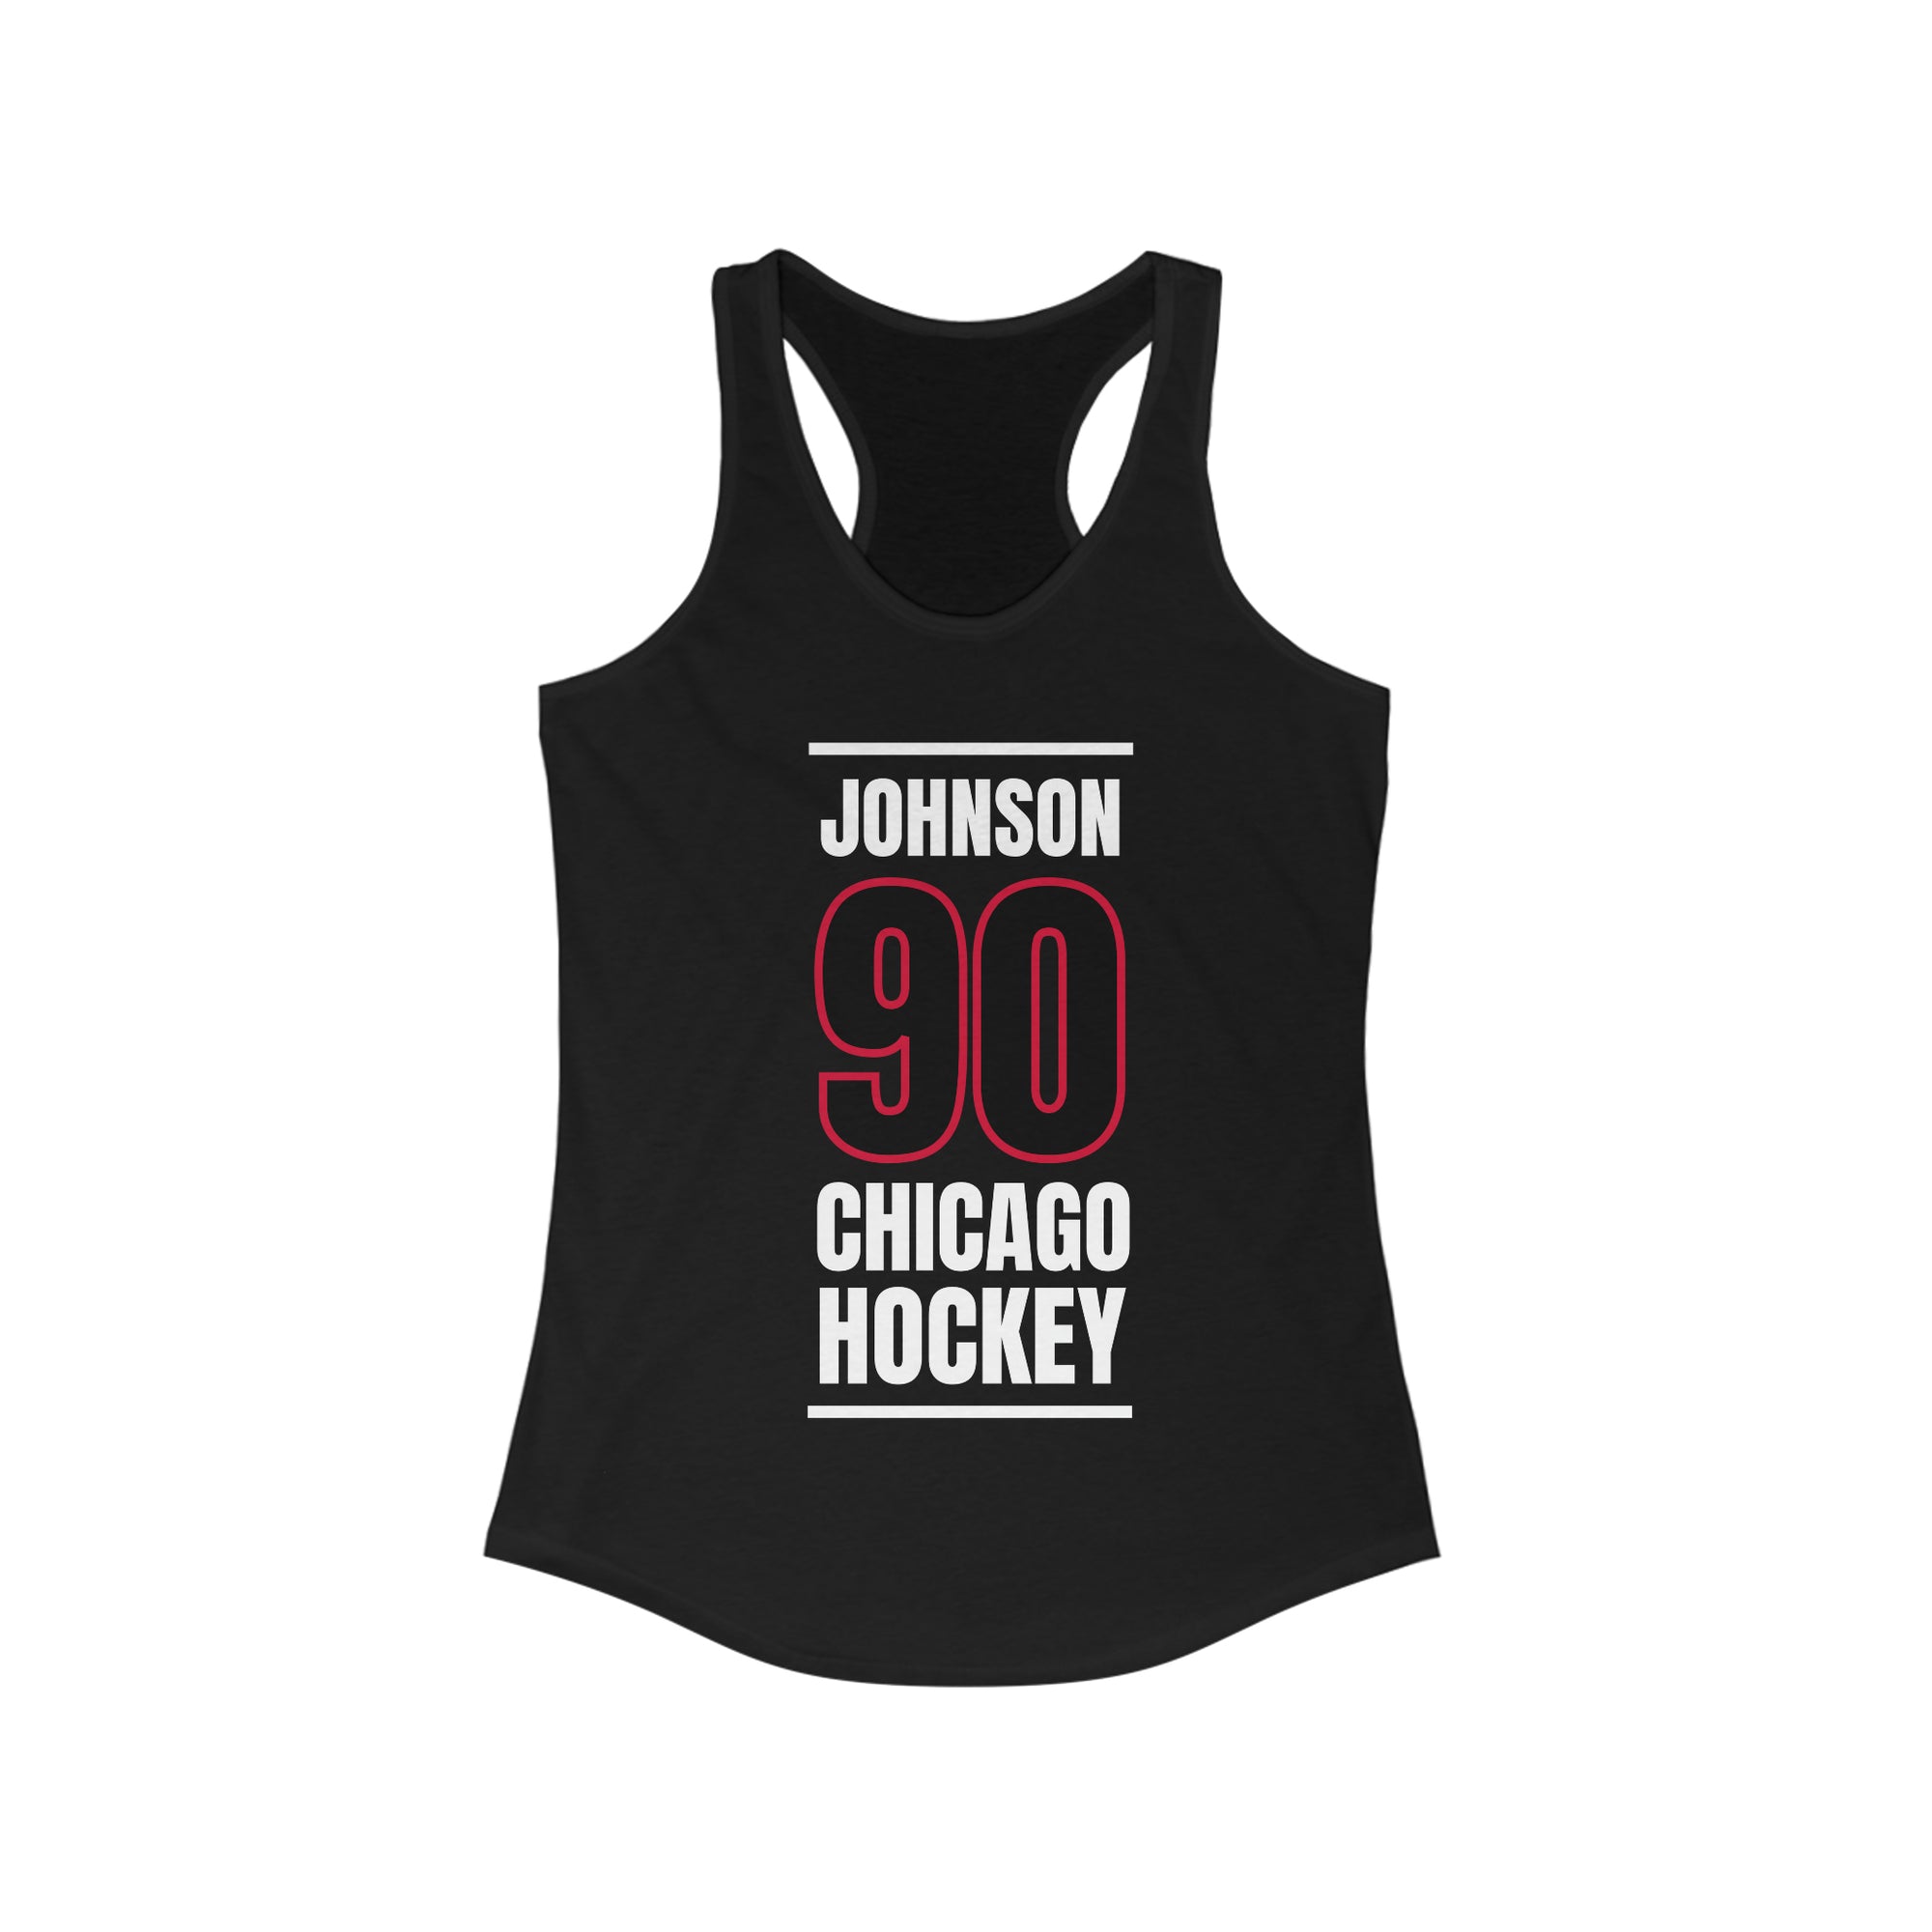 Johnson 90 Chicago Hockey Black Vertical Design Women's Ideal Racerback Tank Top